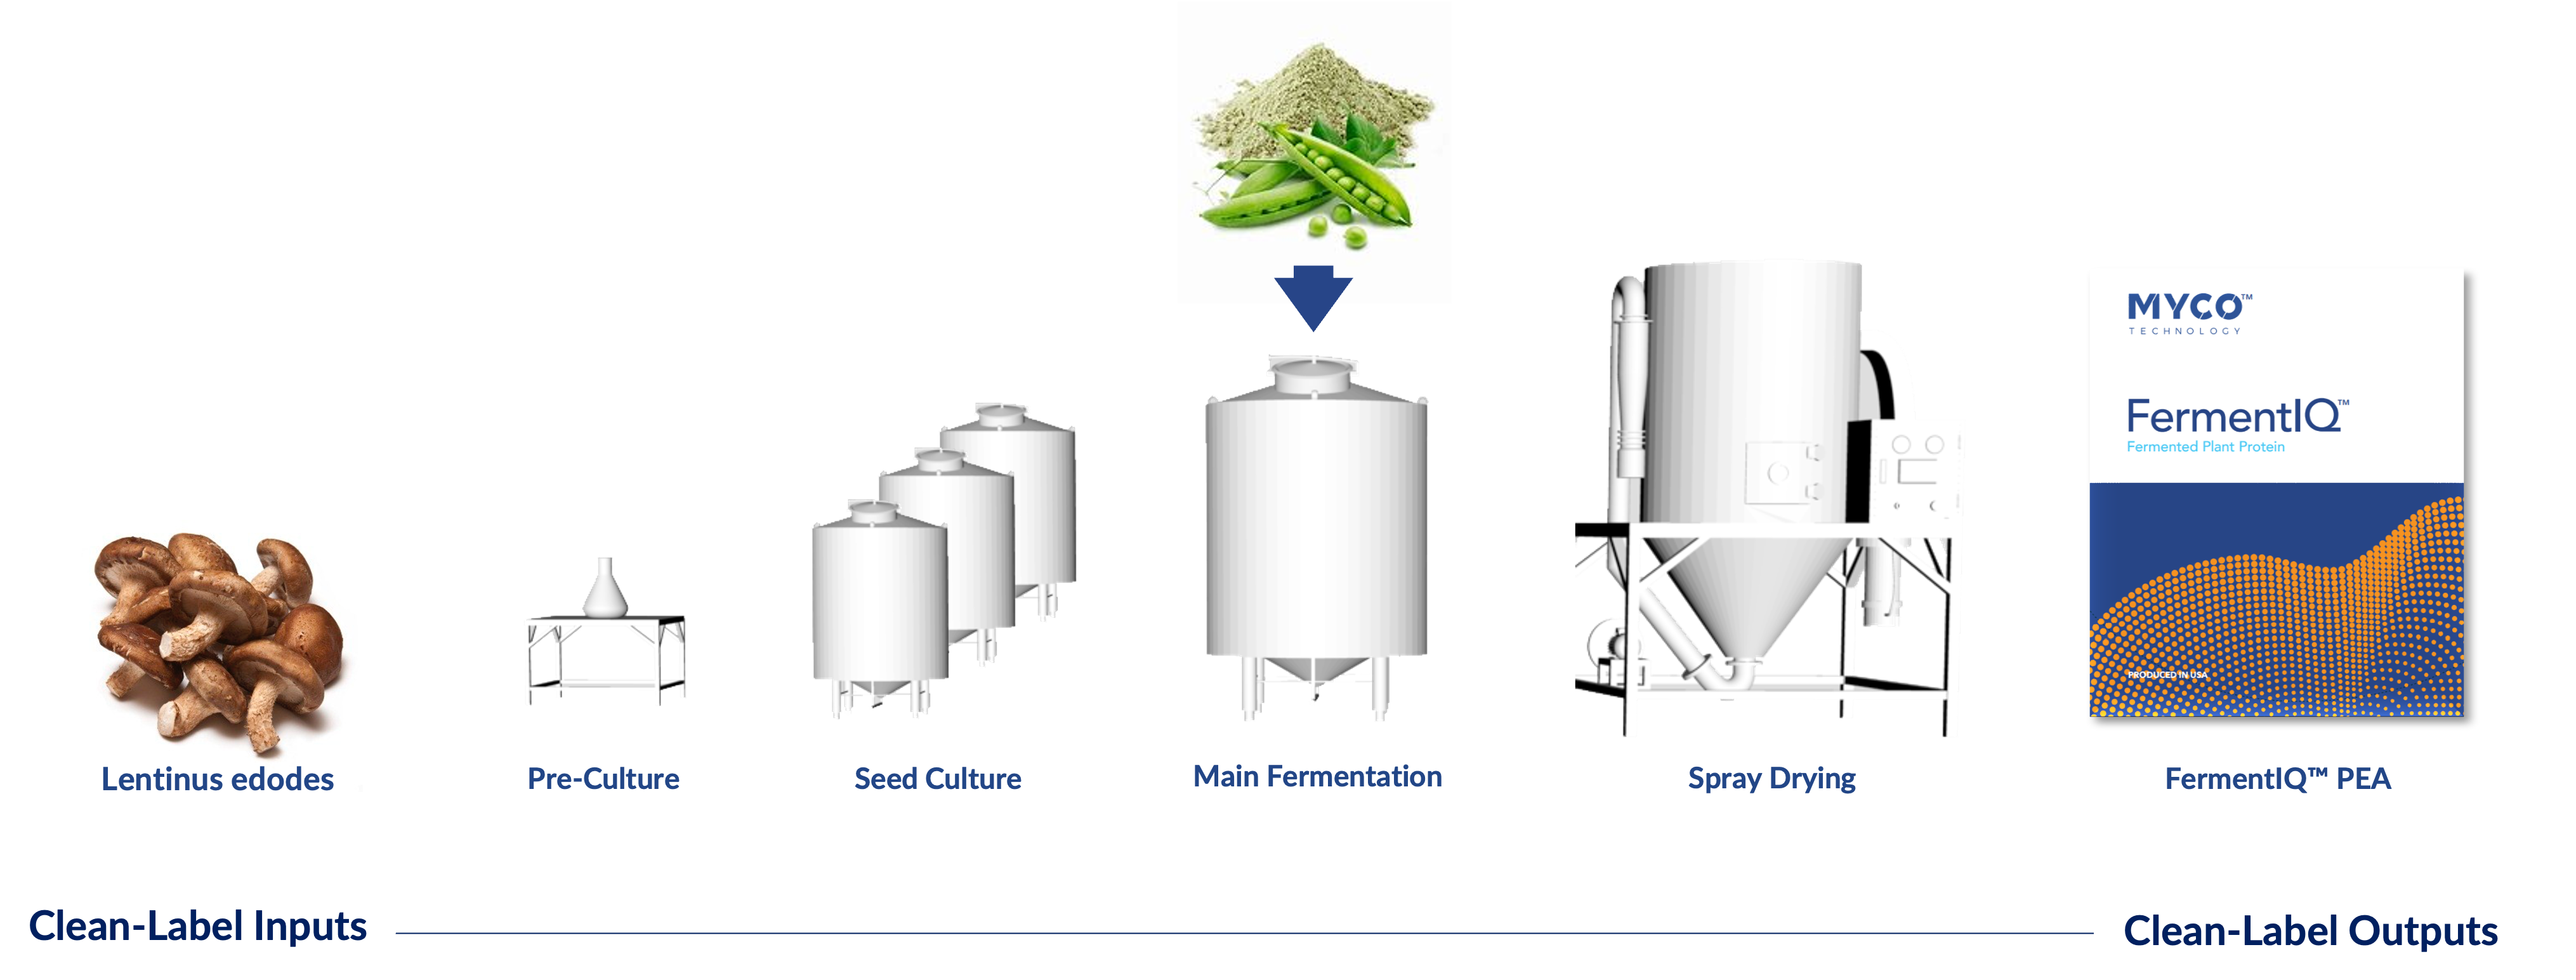 myco fiq fermentation process graphic